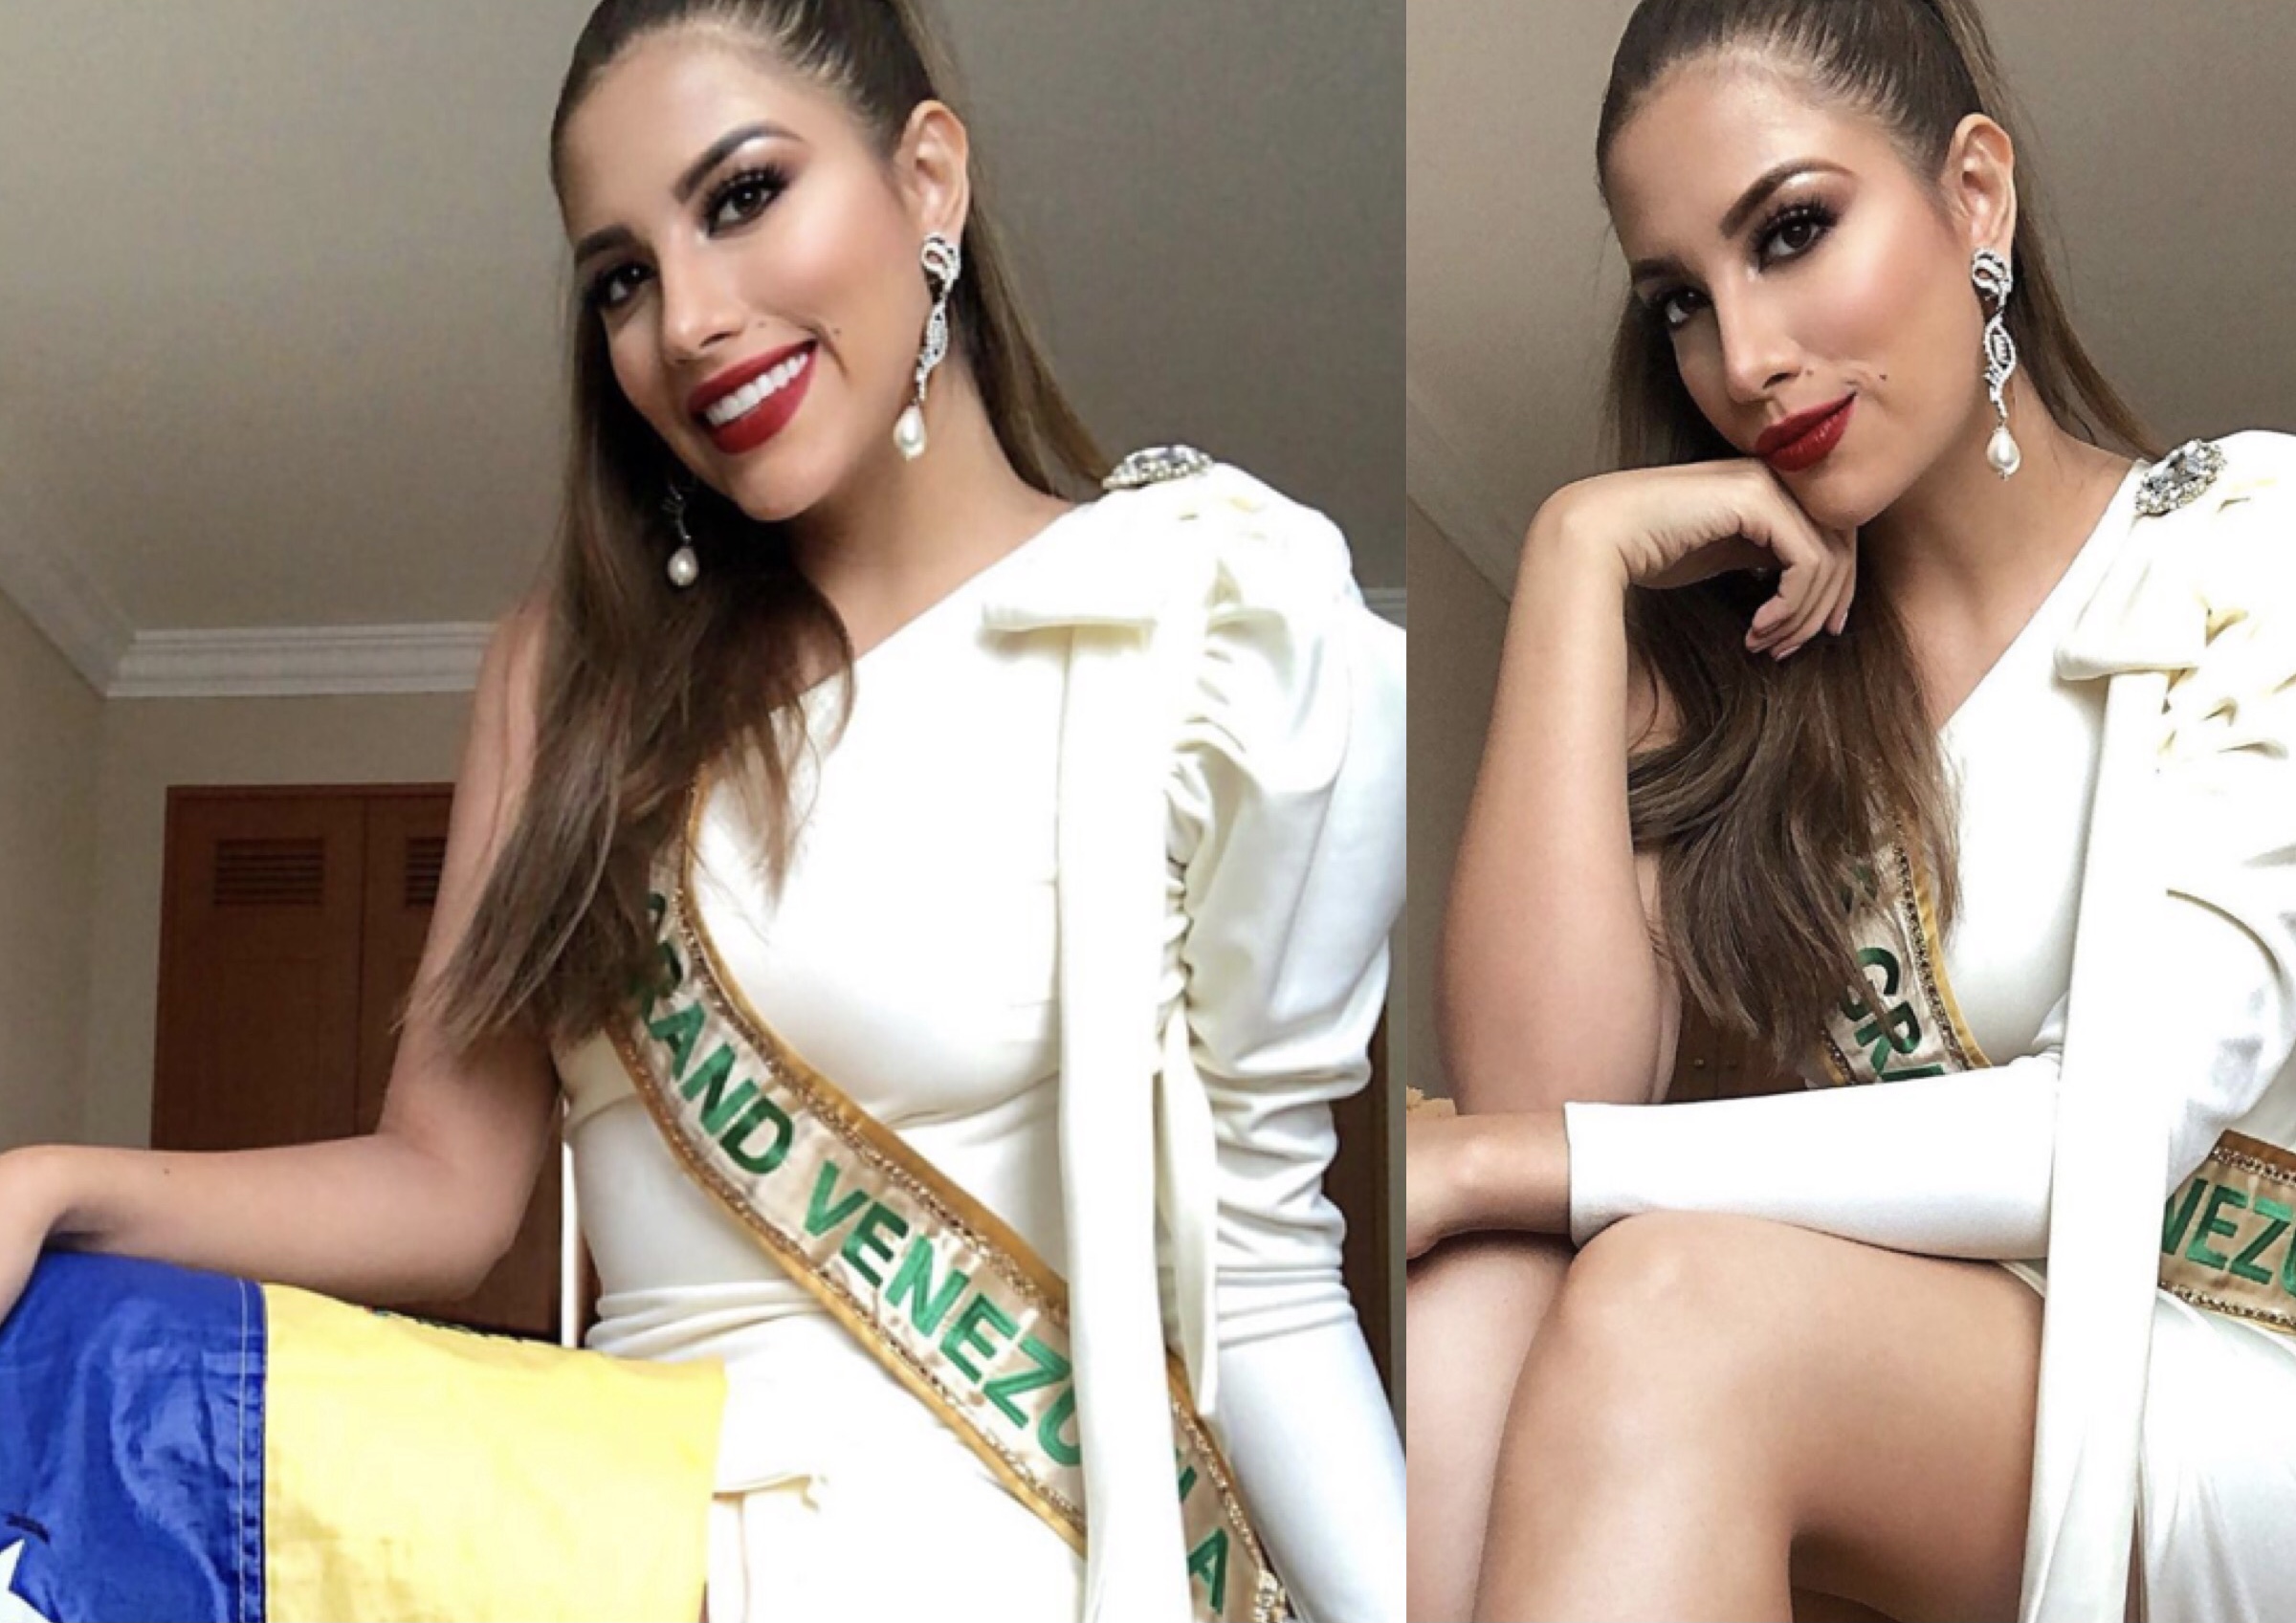 FOTO: Mala jugada del vestuario deja al descubierto los senos de esta miss venezolana